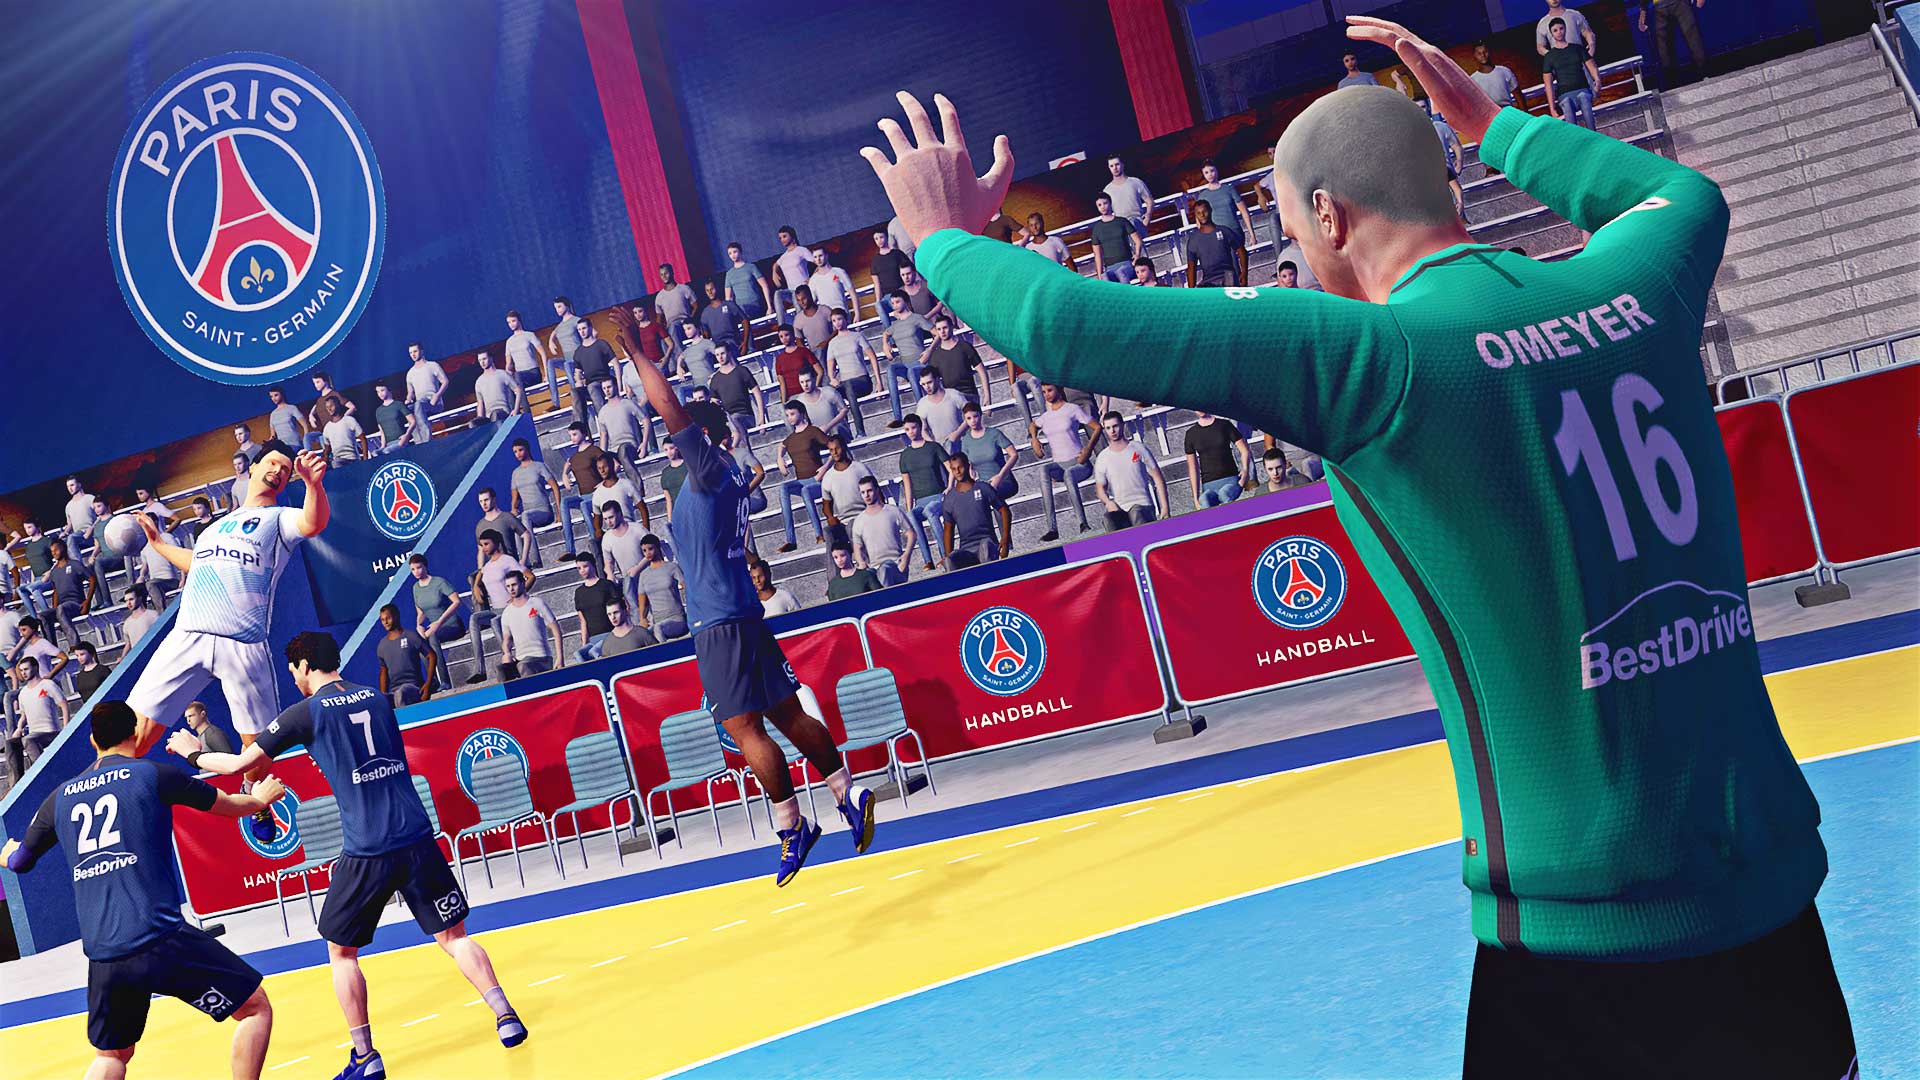 Handball 17 - screenshot 3